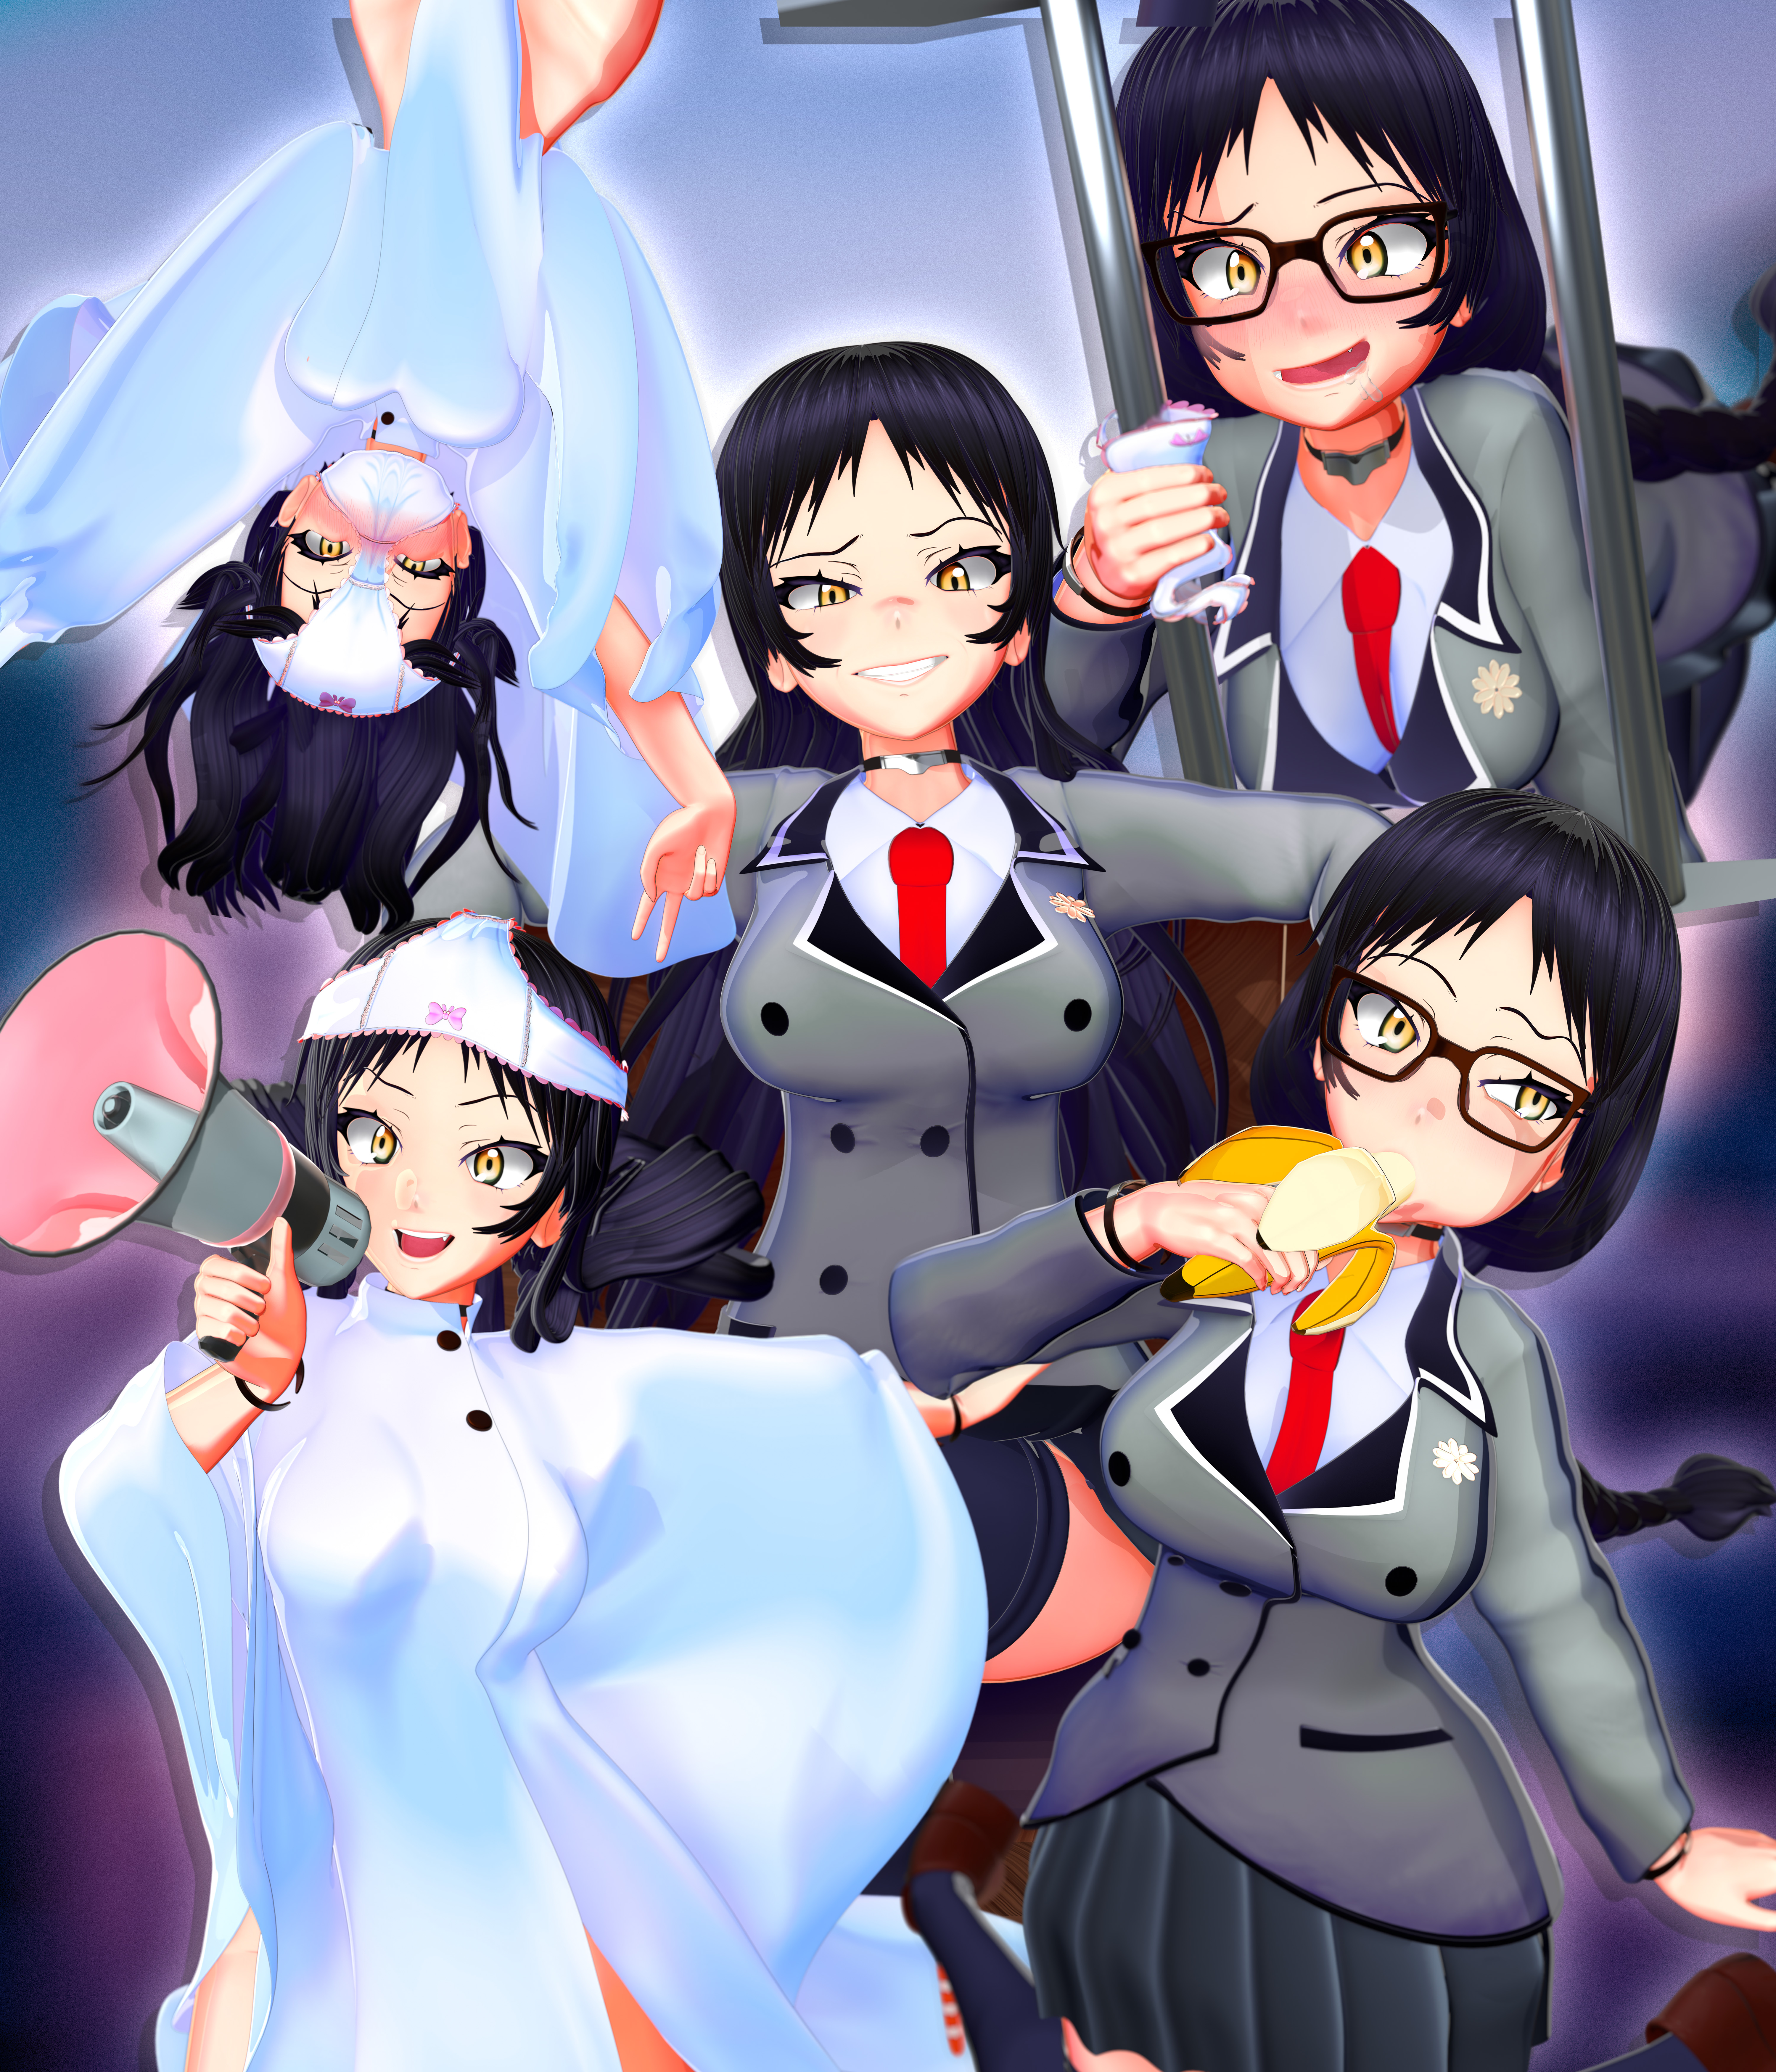 Ayame (custom art) - Anime Girl - Royalty-Free Download